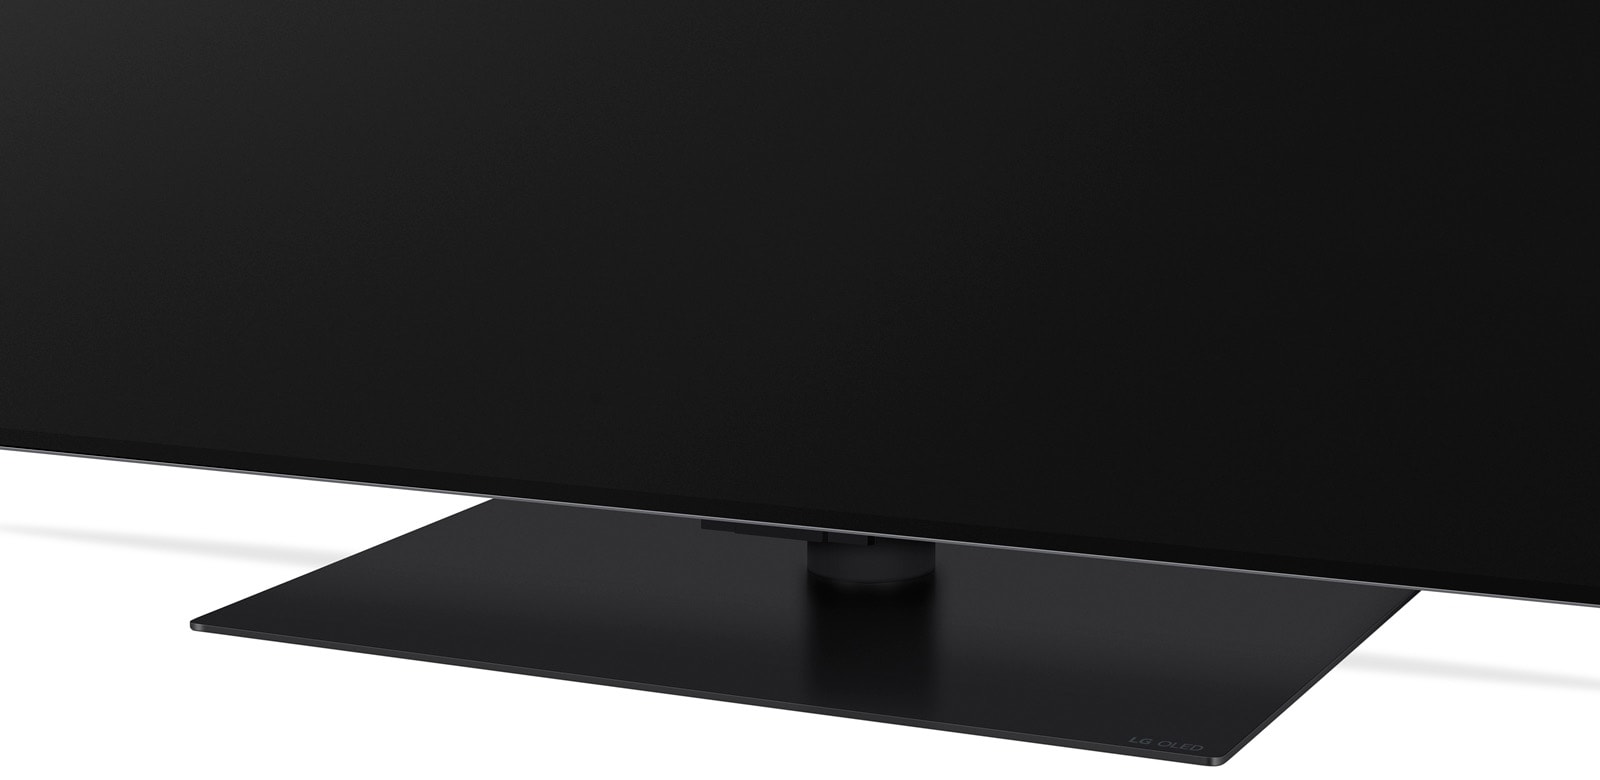 LG Pied d'écran TV  - ST-G4SN65